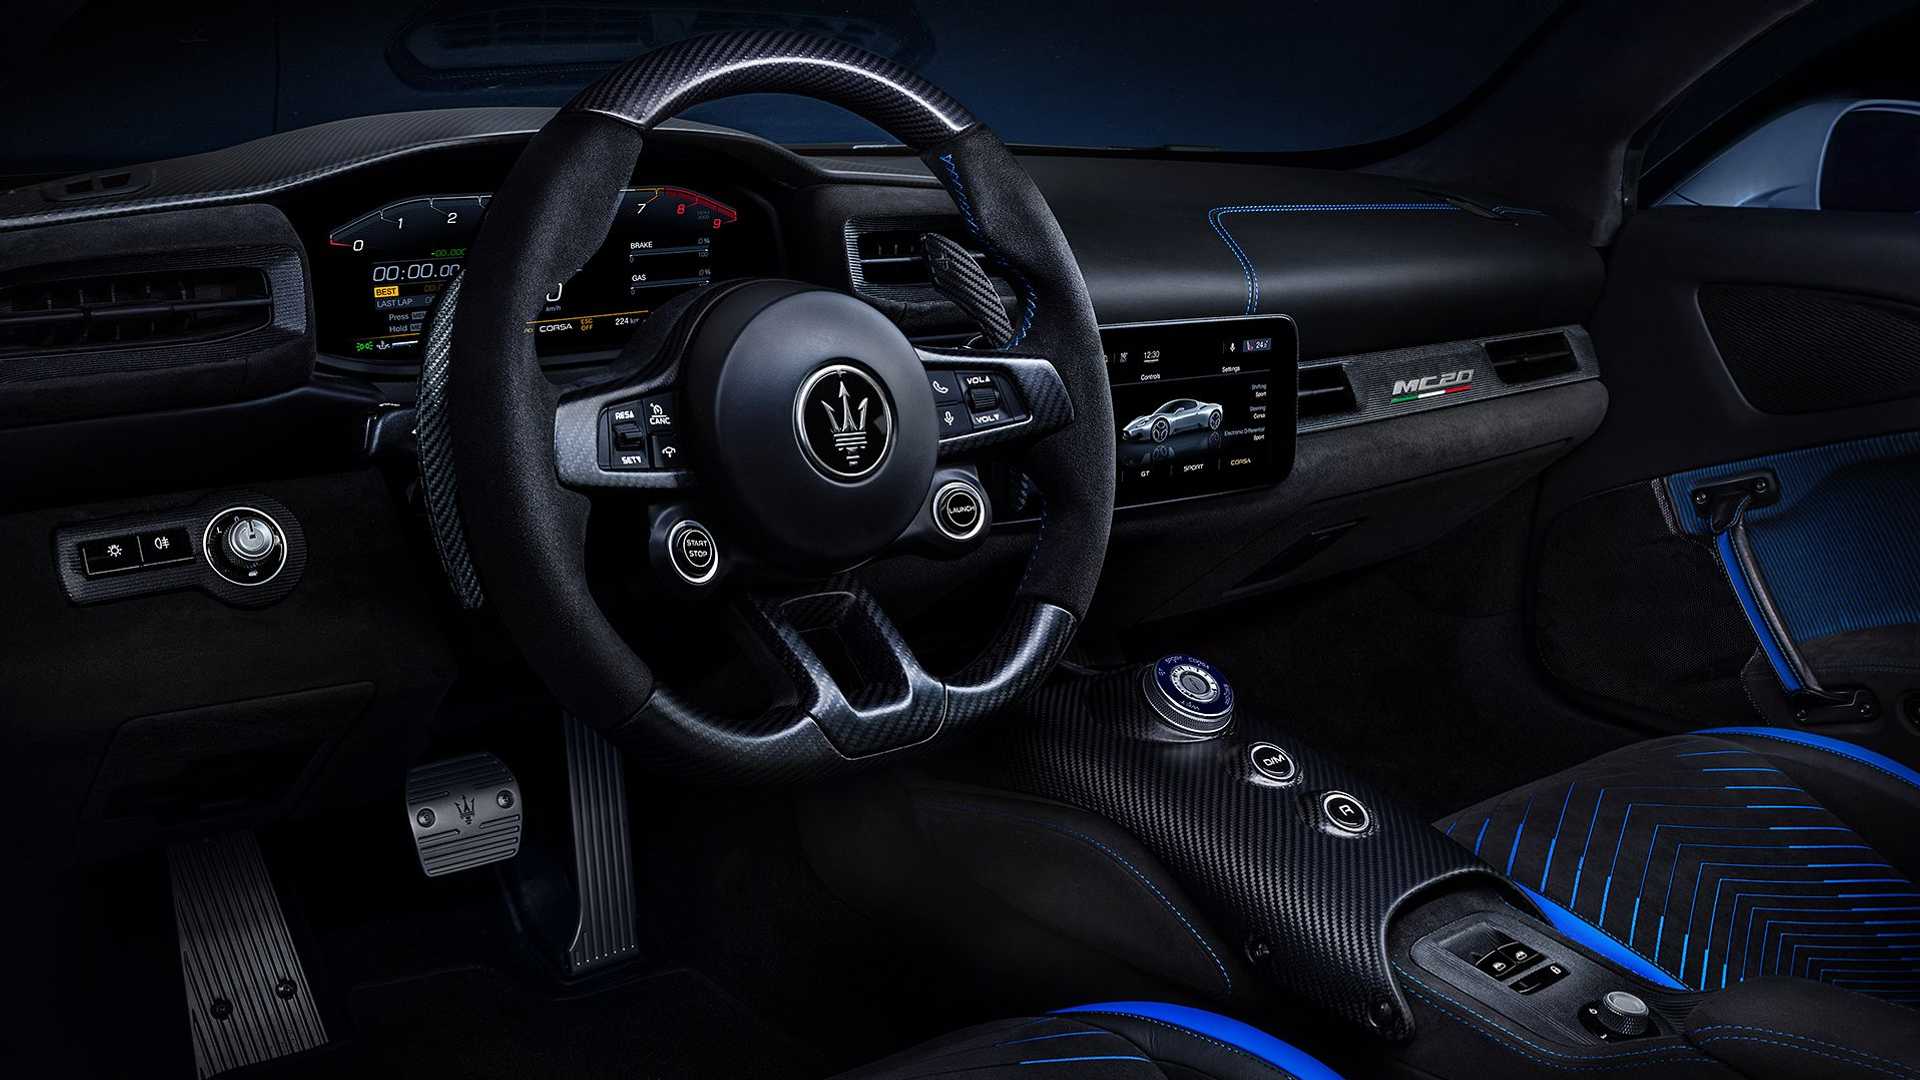 Maserati MC20 interior - Cockpit